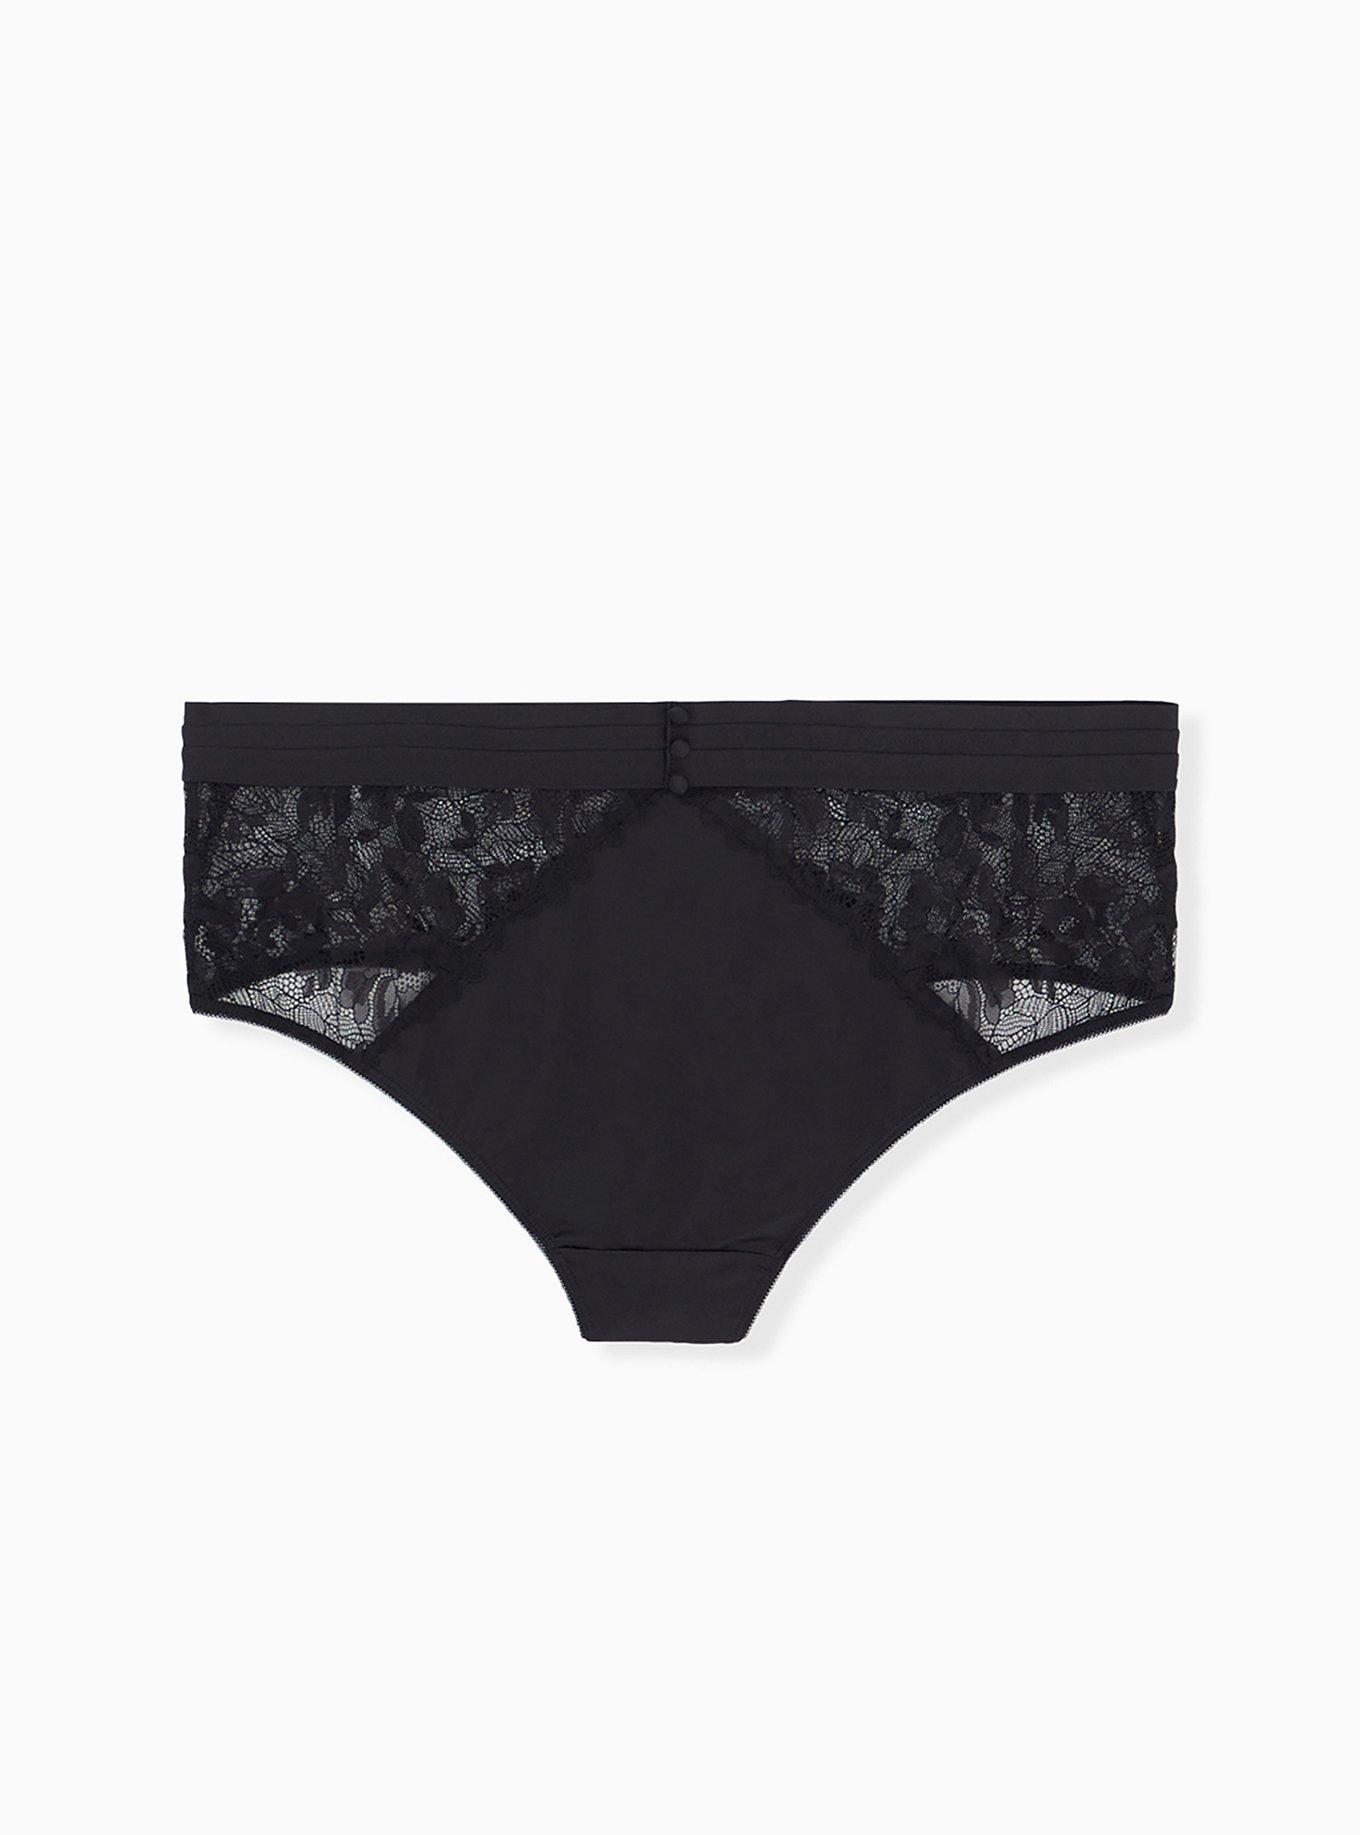 Anything You Want Lace Thong Panty - Black, Fashion Nova, Lingerie &  Sleepwear